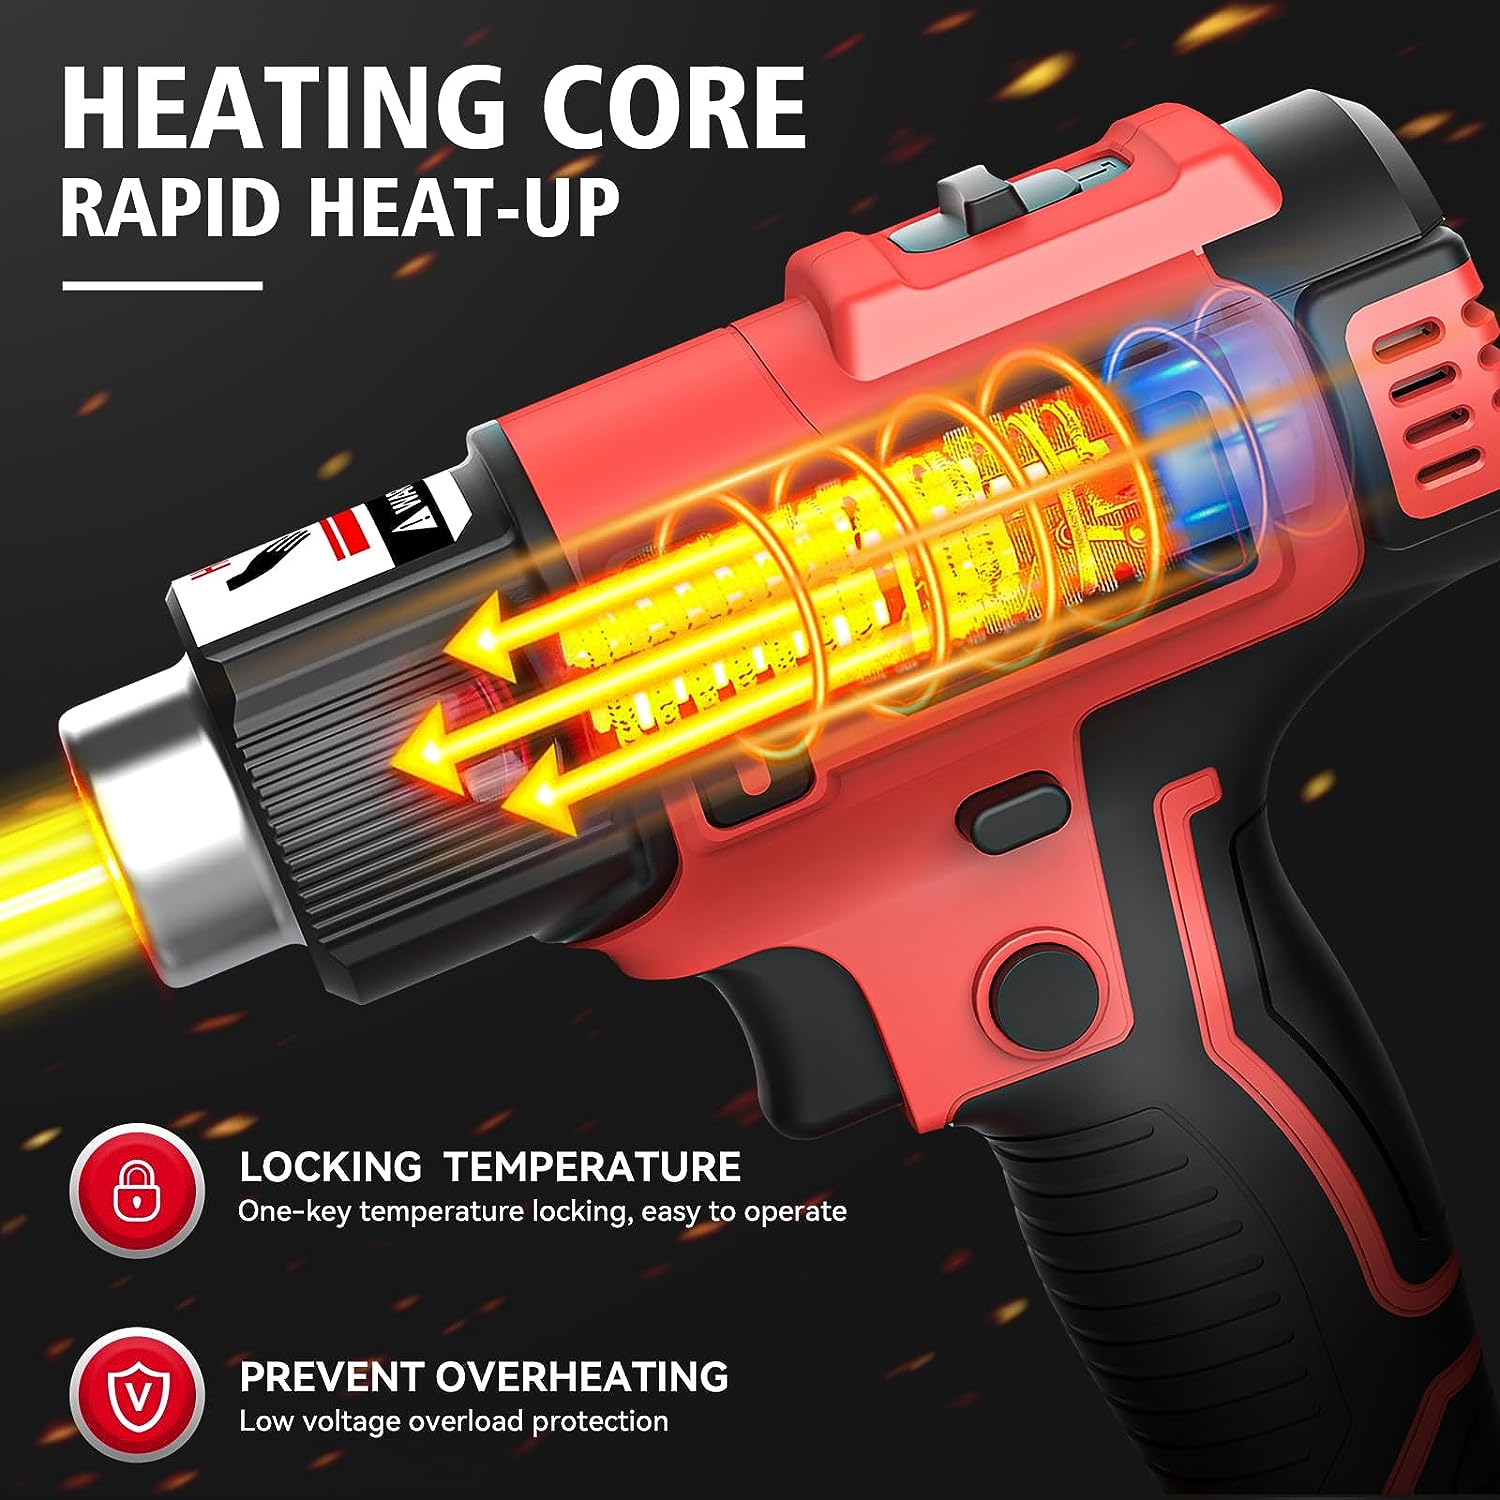 Cordless Heat Gun for Milwaukee M18 18V Battery - Adjustable Temperatu –  Ecarke